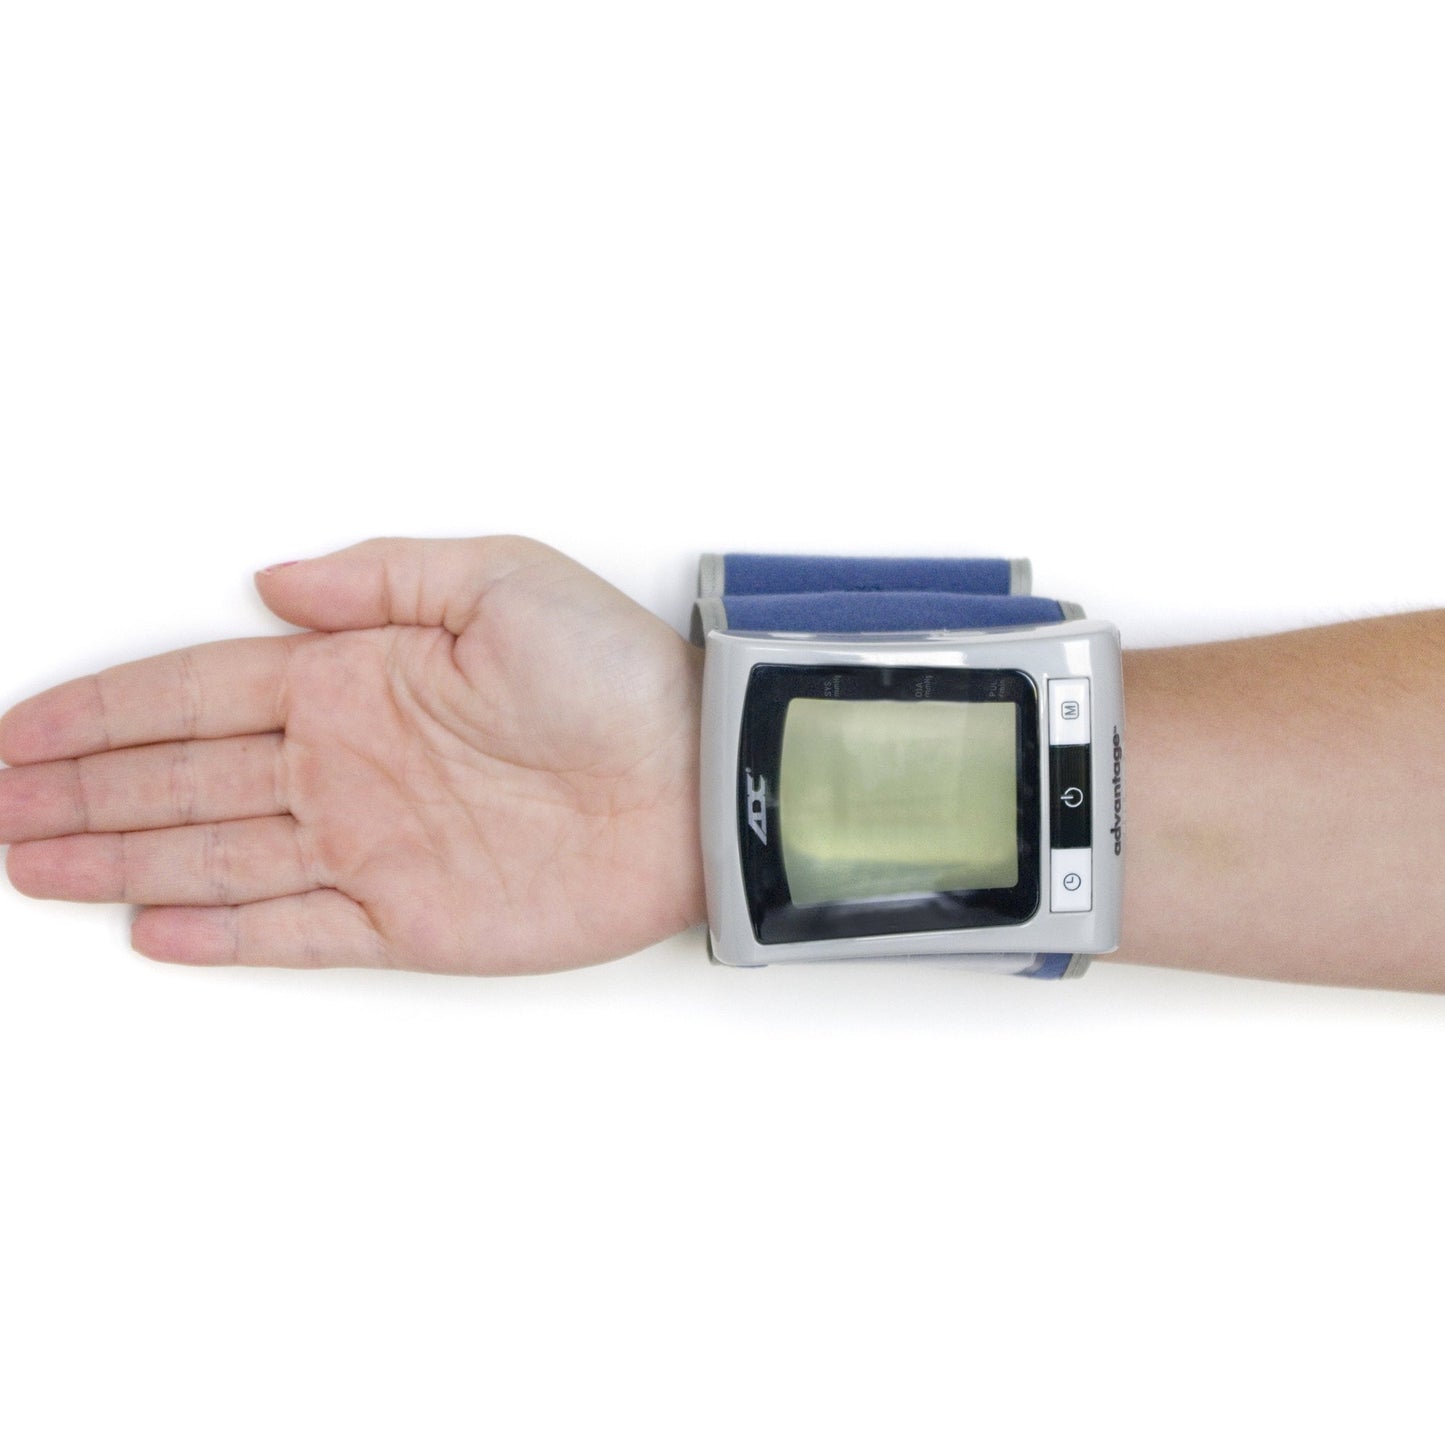 Advantage™ Wrist Digital Blood Pressure Monitor